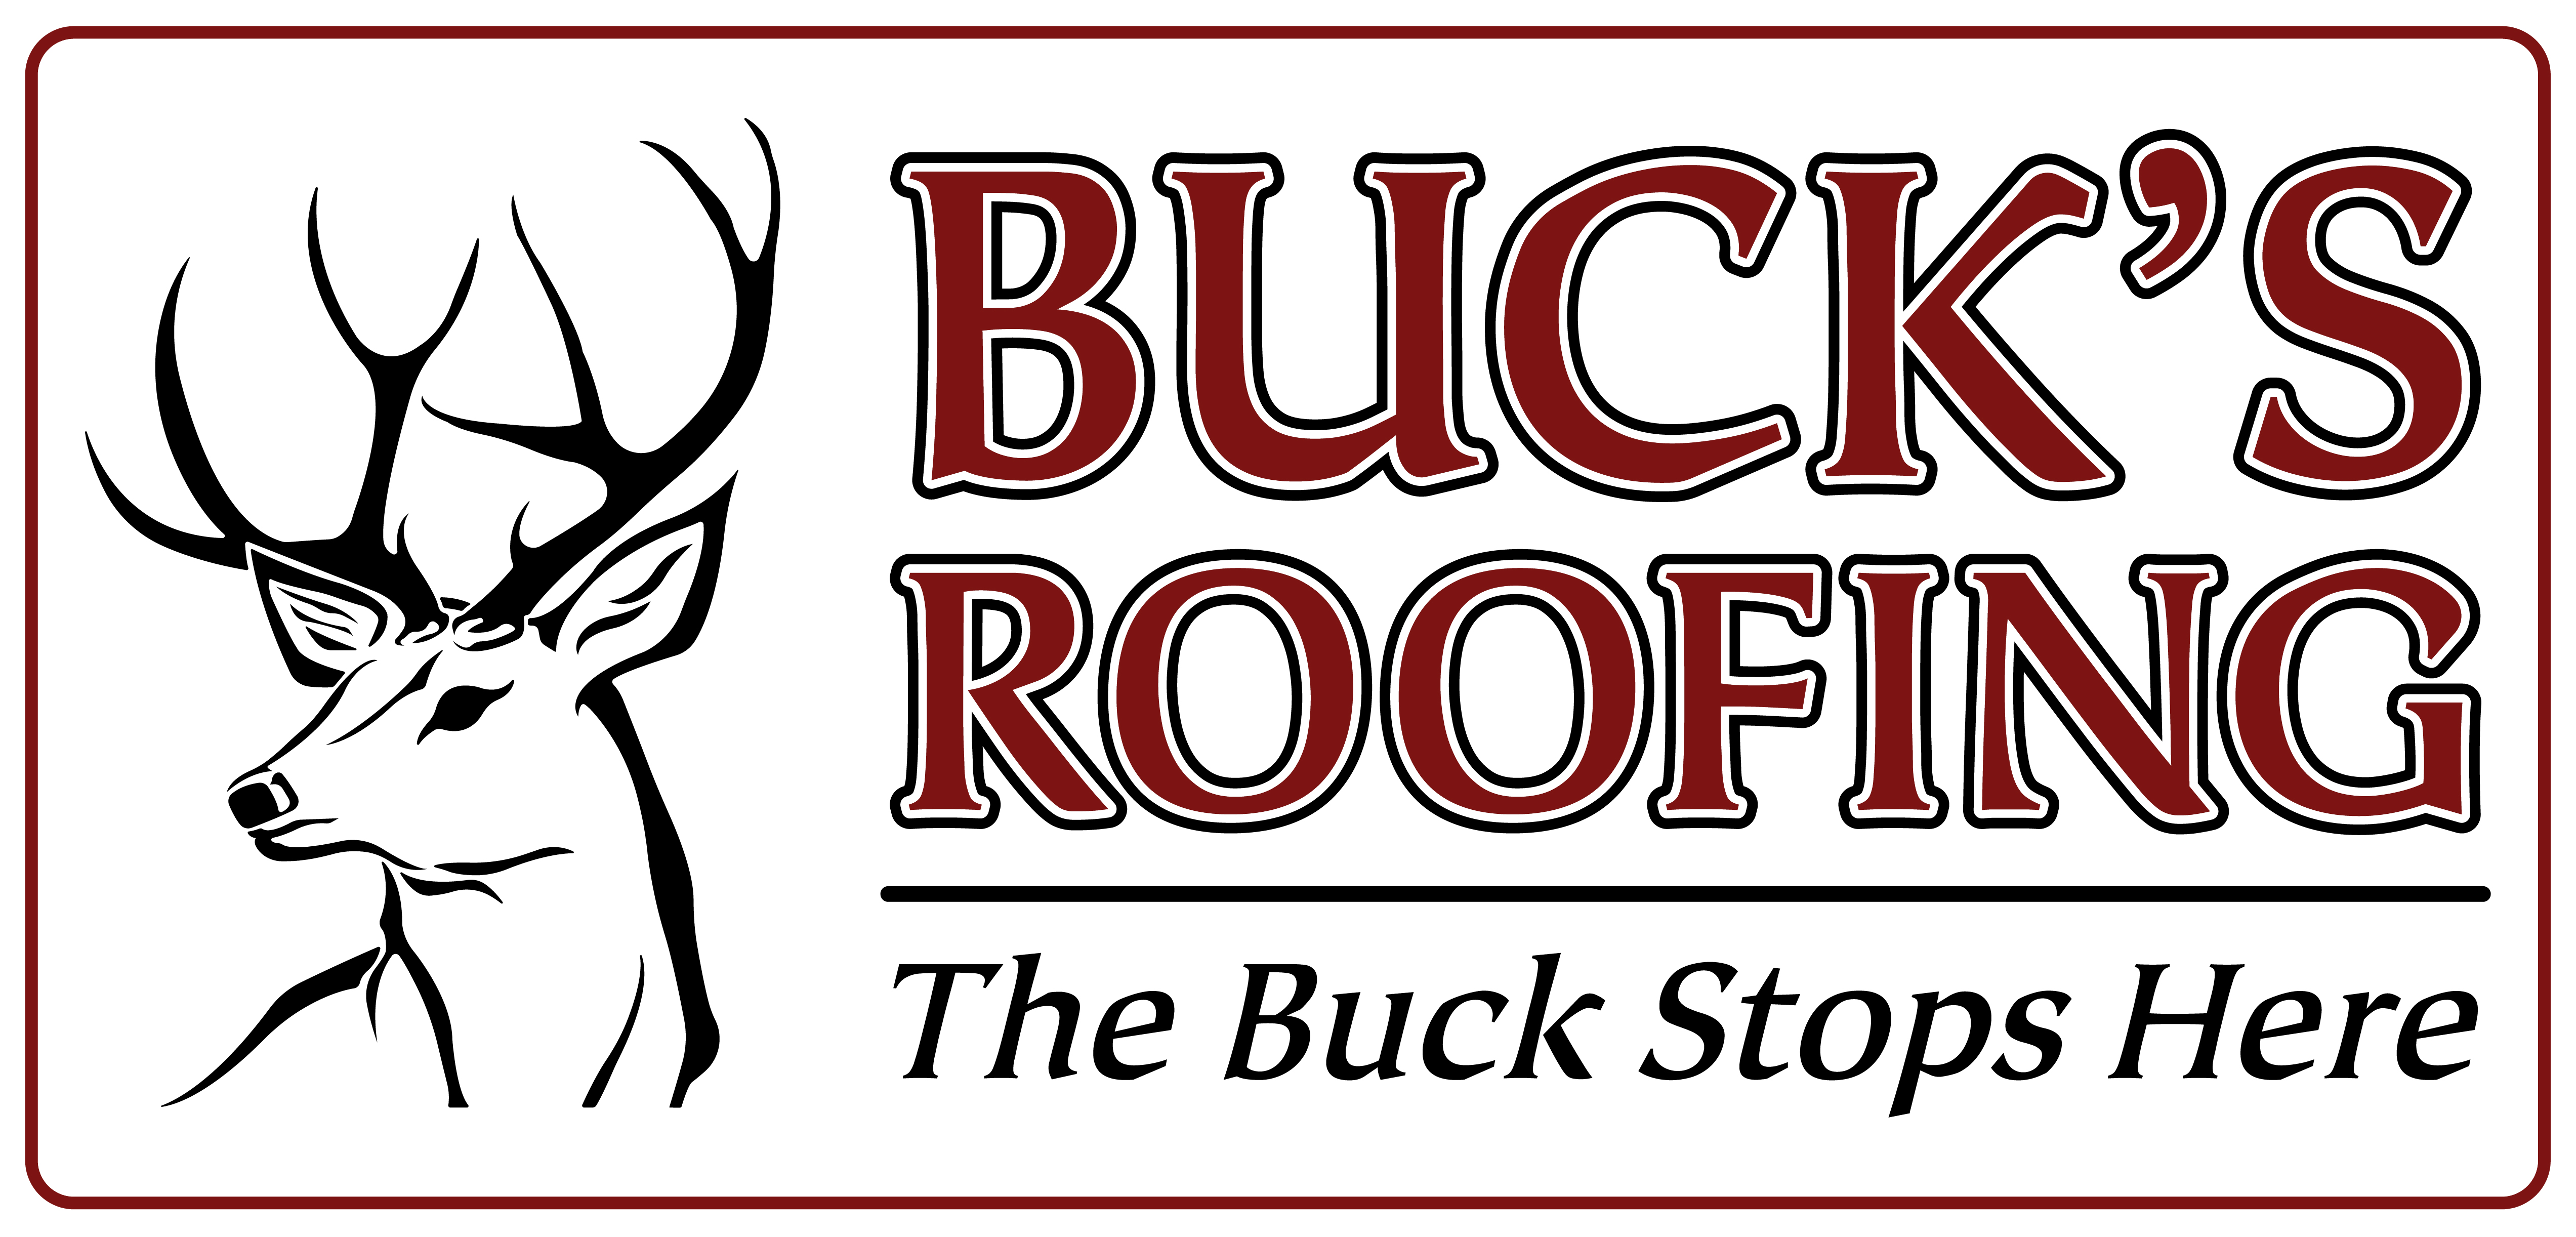 Bucks Roofing: San Jose CA Roofing Contractor Top Rated